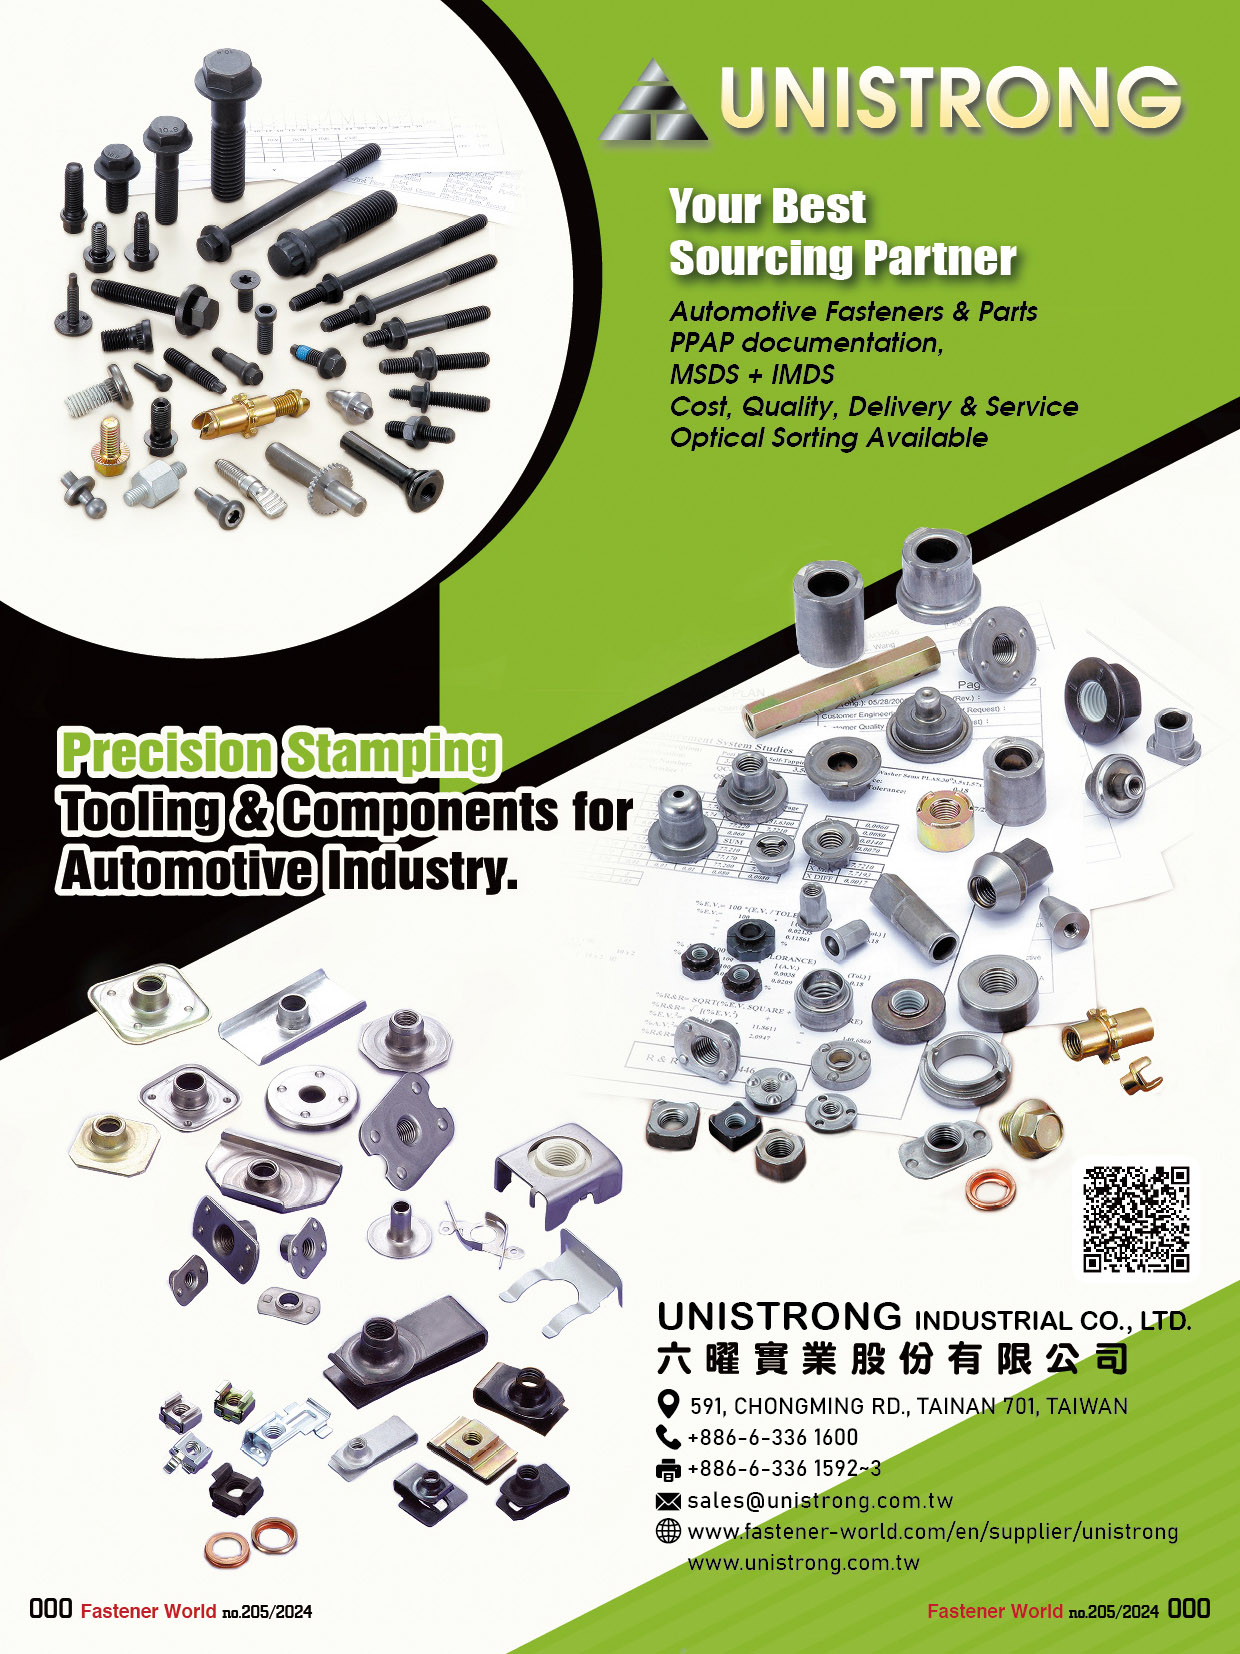 UNISTRONG INDUSTRIAL CO., LTD.  , Automotive Fasteners & Parts, Components & Parts, Non-standard Fasteners, Automobile Accessories,  Automotive Parts